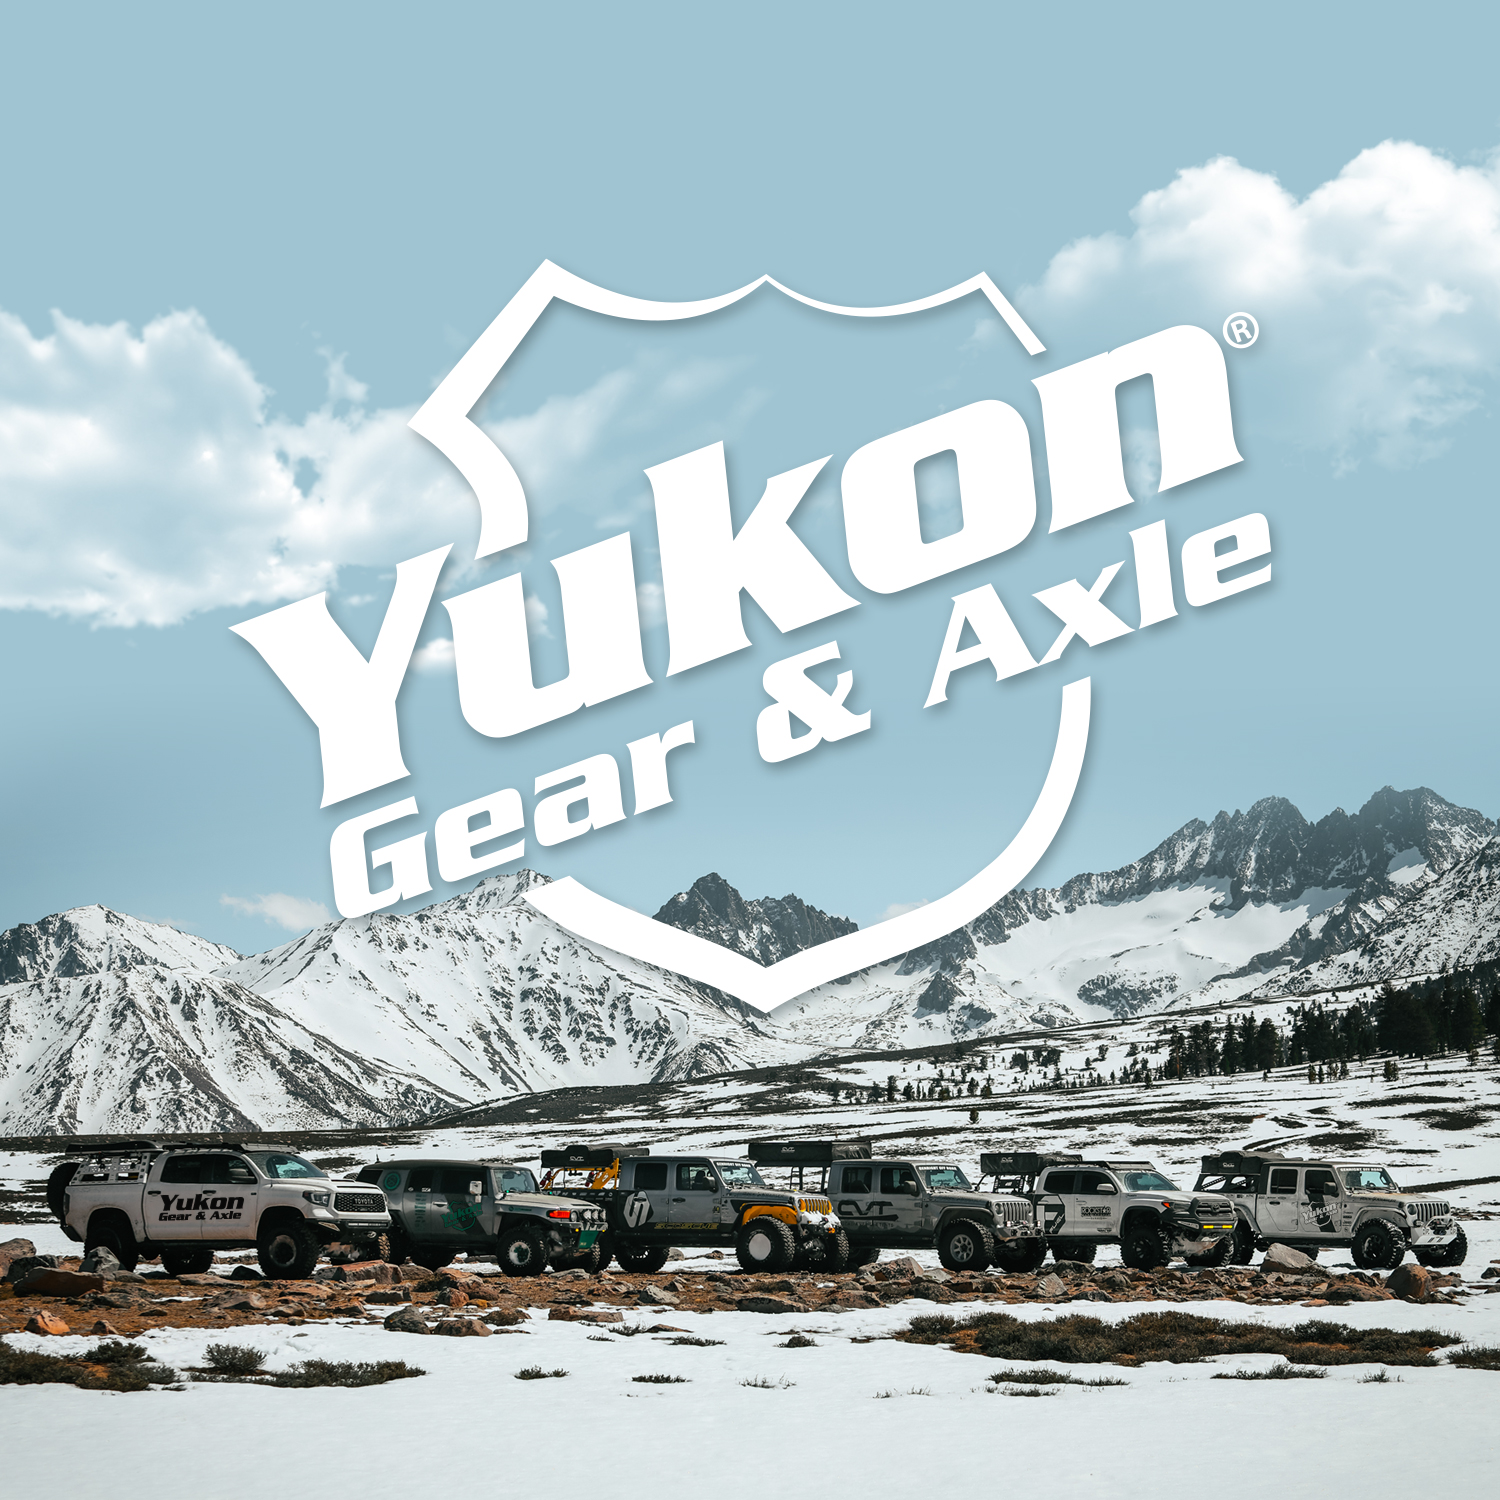 Yukon high performance replacement ring & pinion gear set, Dana 60, 7.17 ratio 